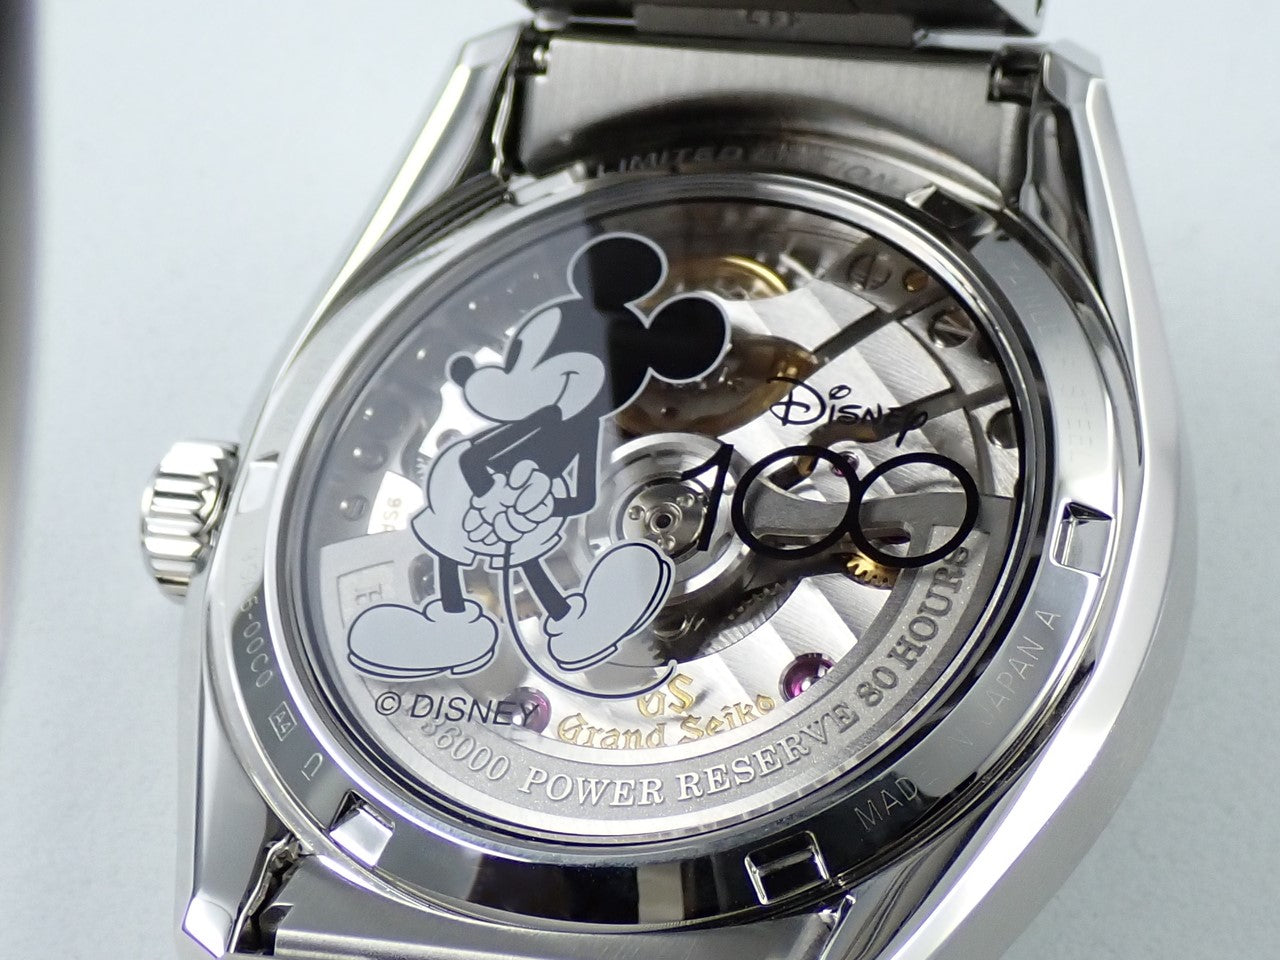 Grand Seiko Disney 100 Limited Edition &lt;Warranty, Box, etc.&gt;